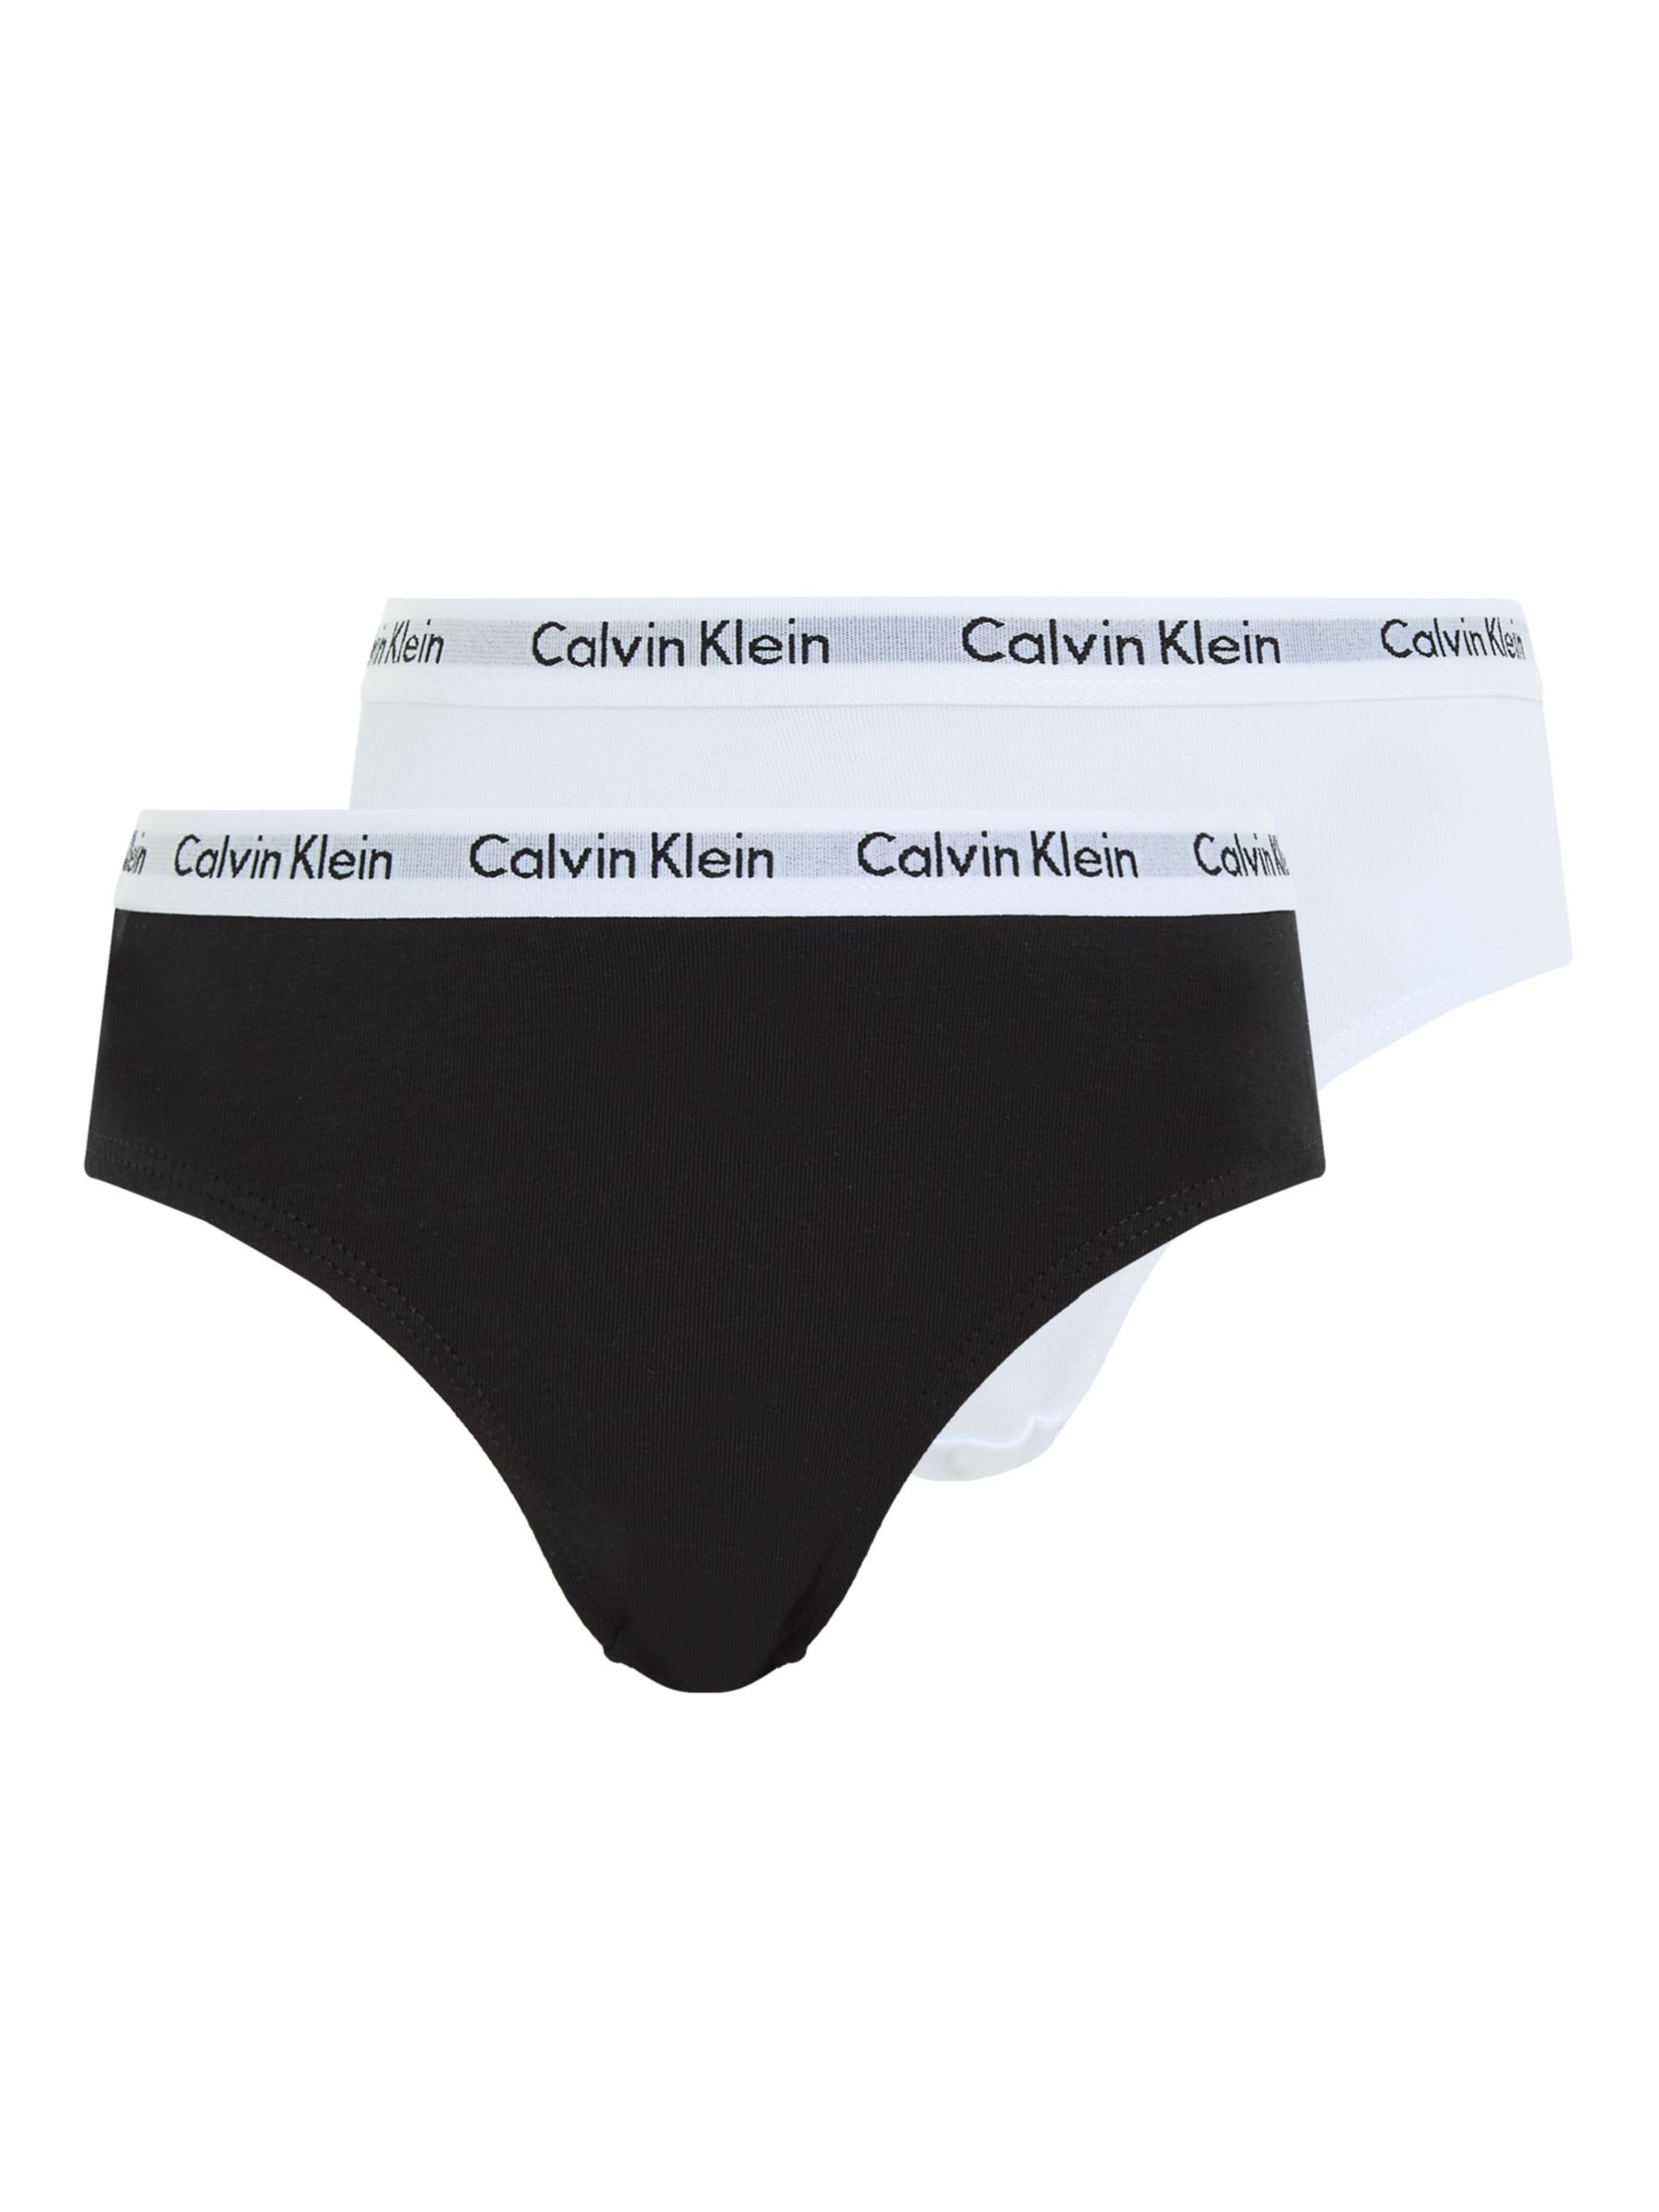 Calvin Klein Kids' Bikini Briefs, Pack of 2, Black/White at John Lewis &  Partners